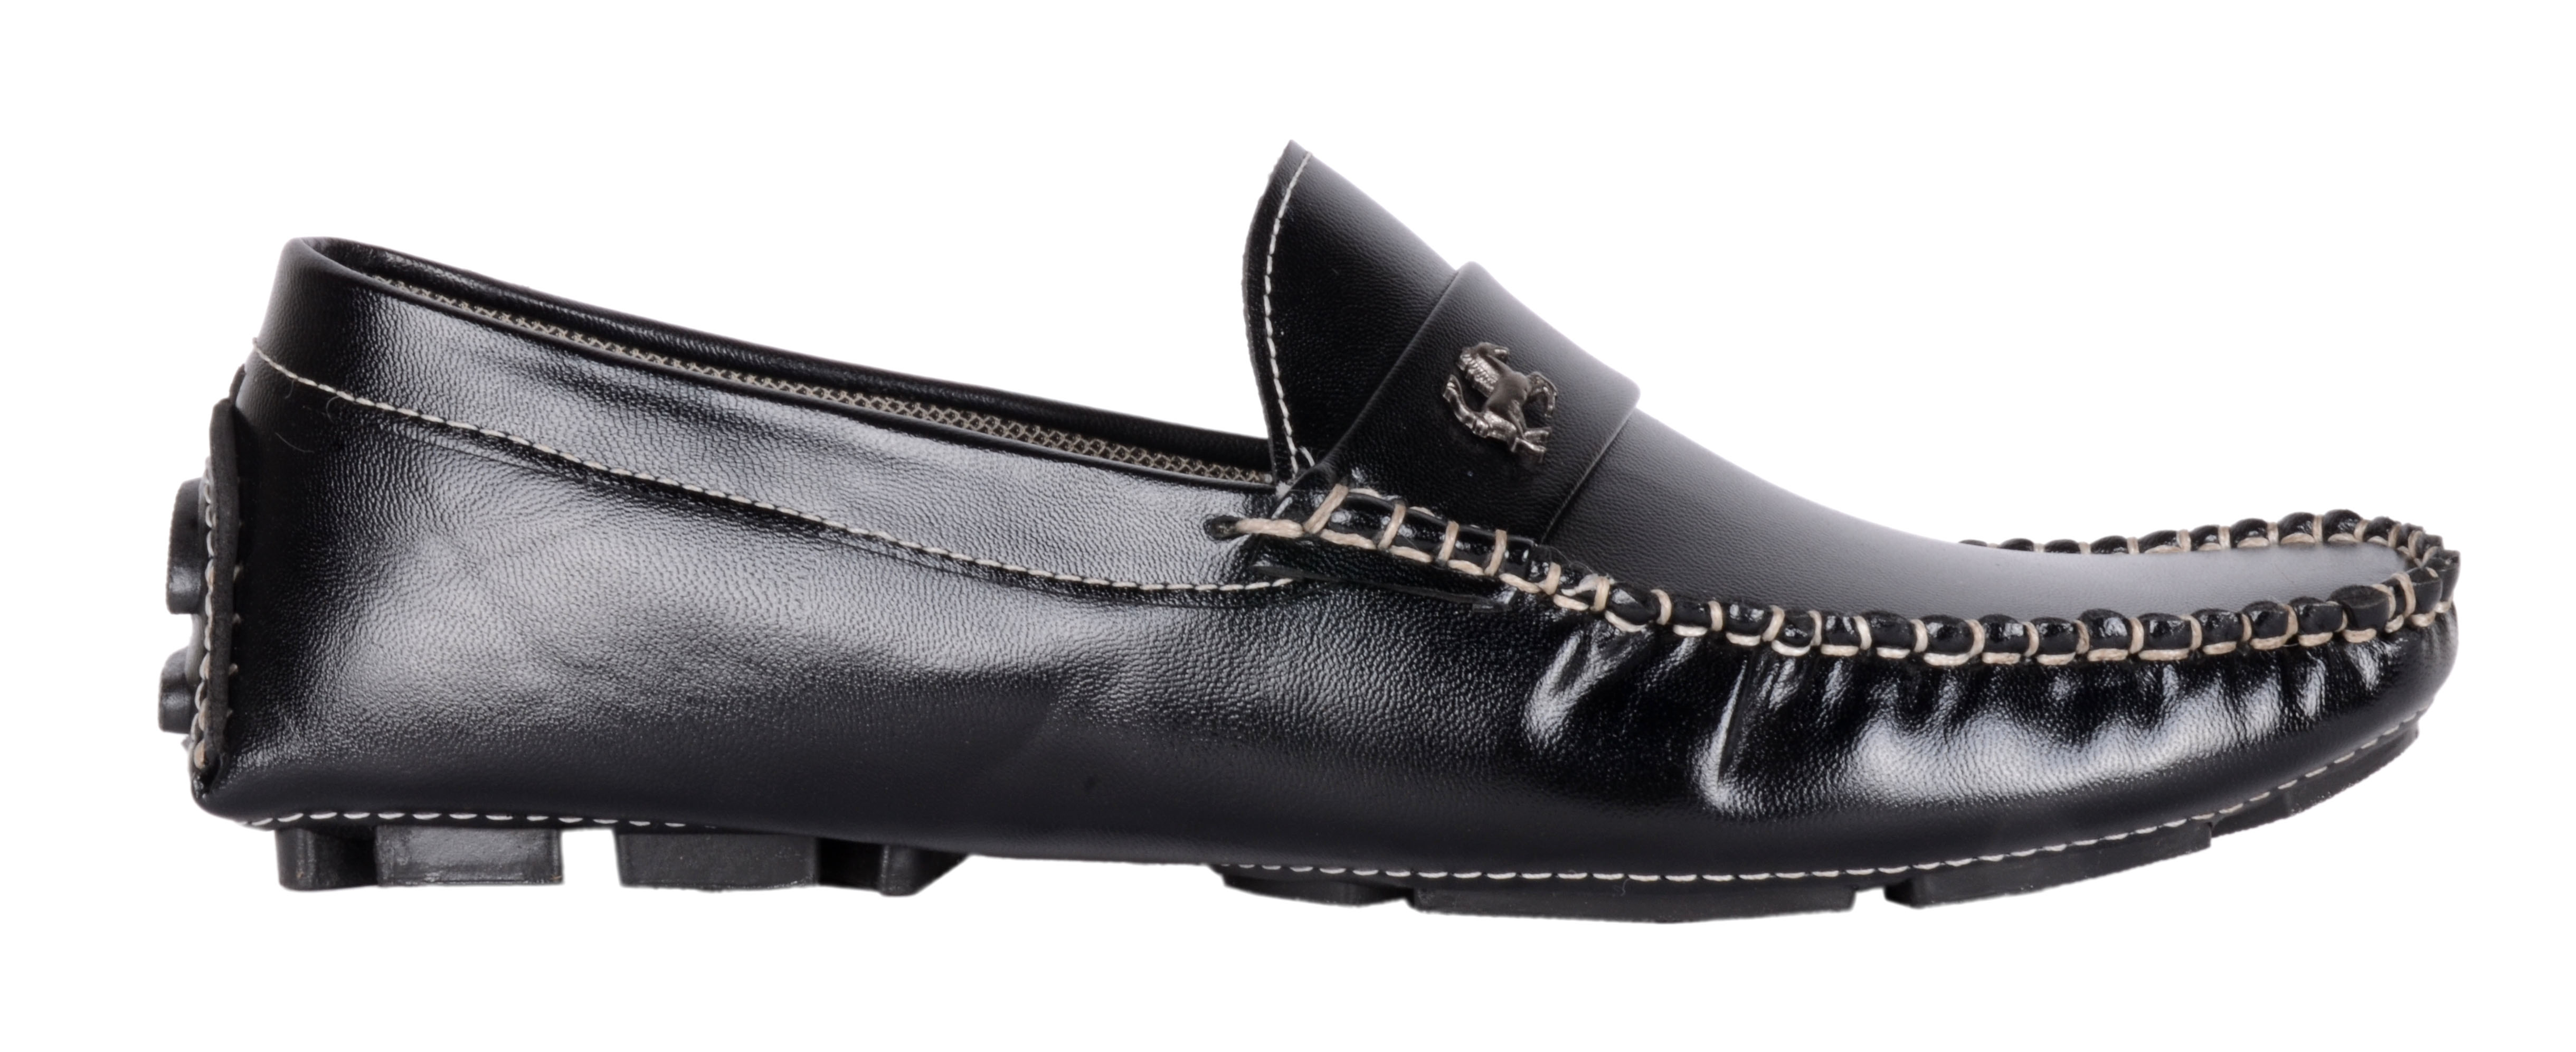 Buy Shoeniverse Mens Black Leather Driving Shoes Office purpose Black ...